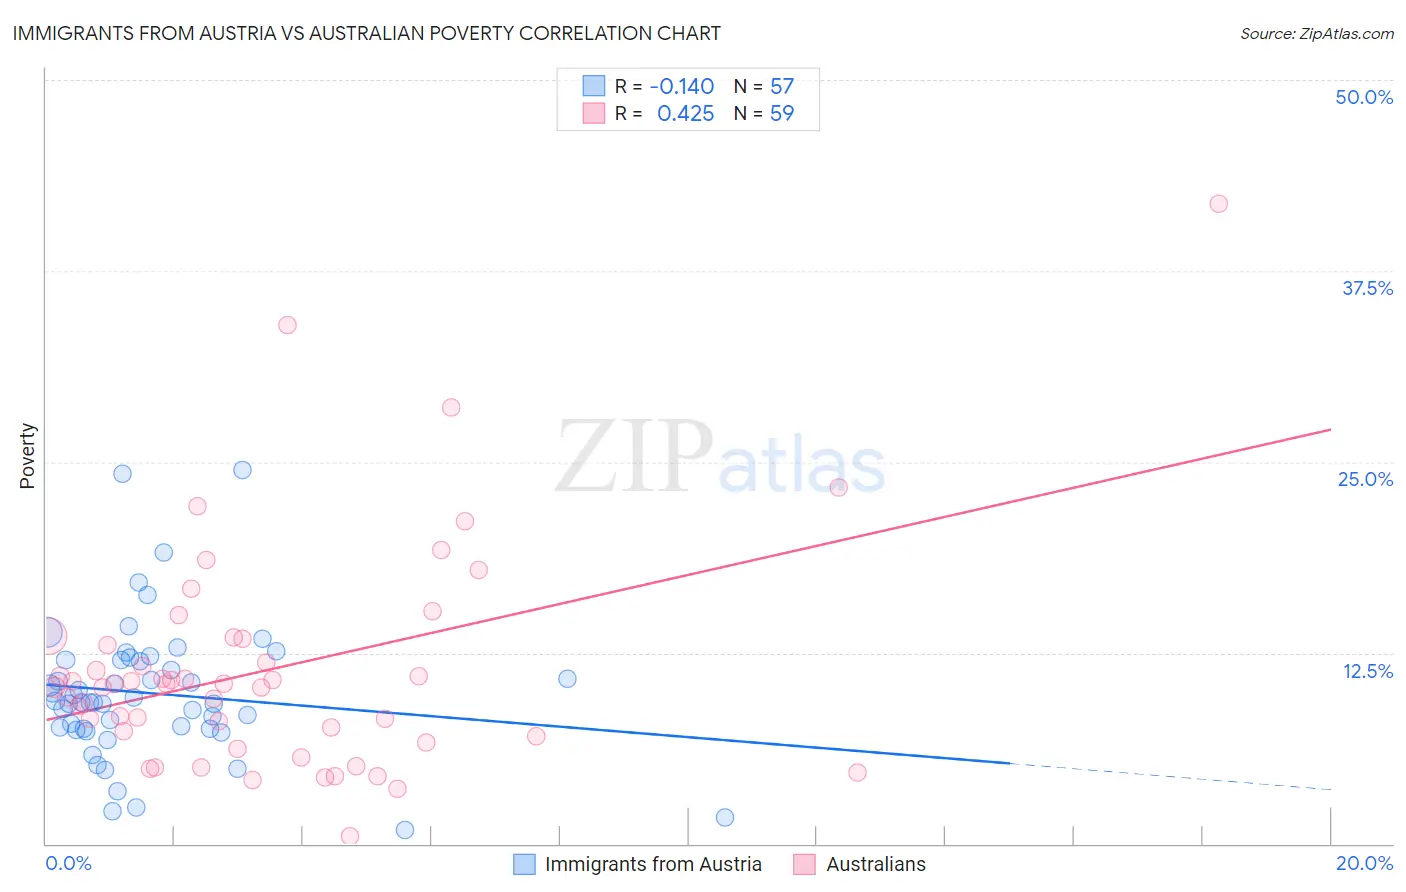 Immigrants from Austria vs Australian Poverty